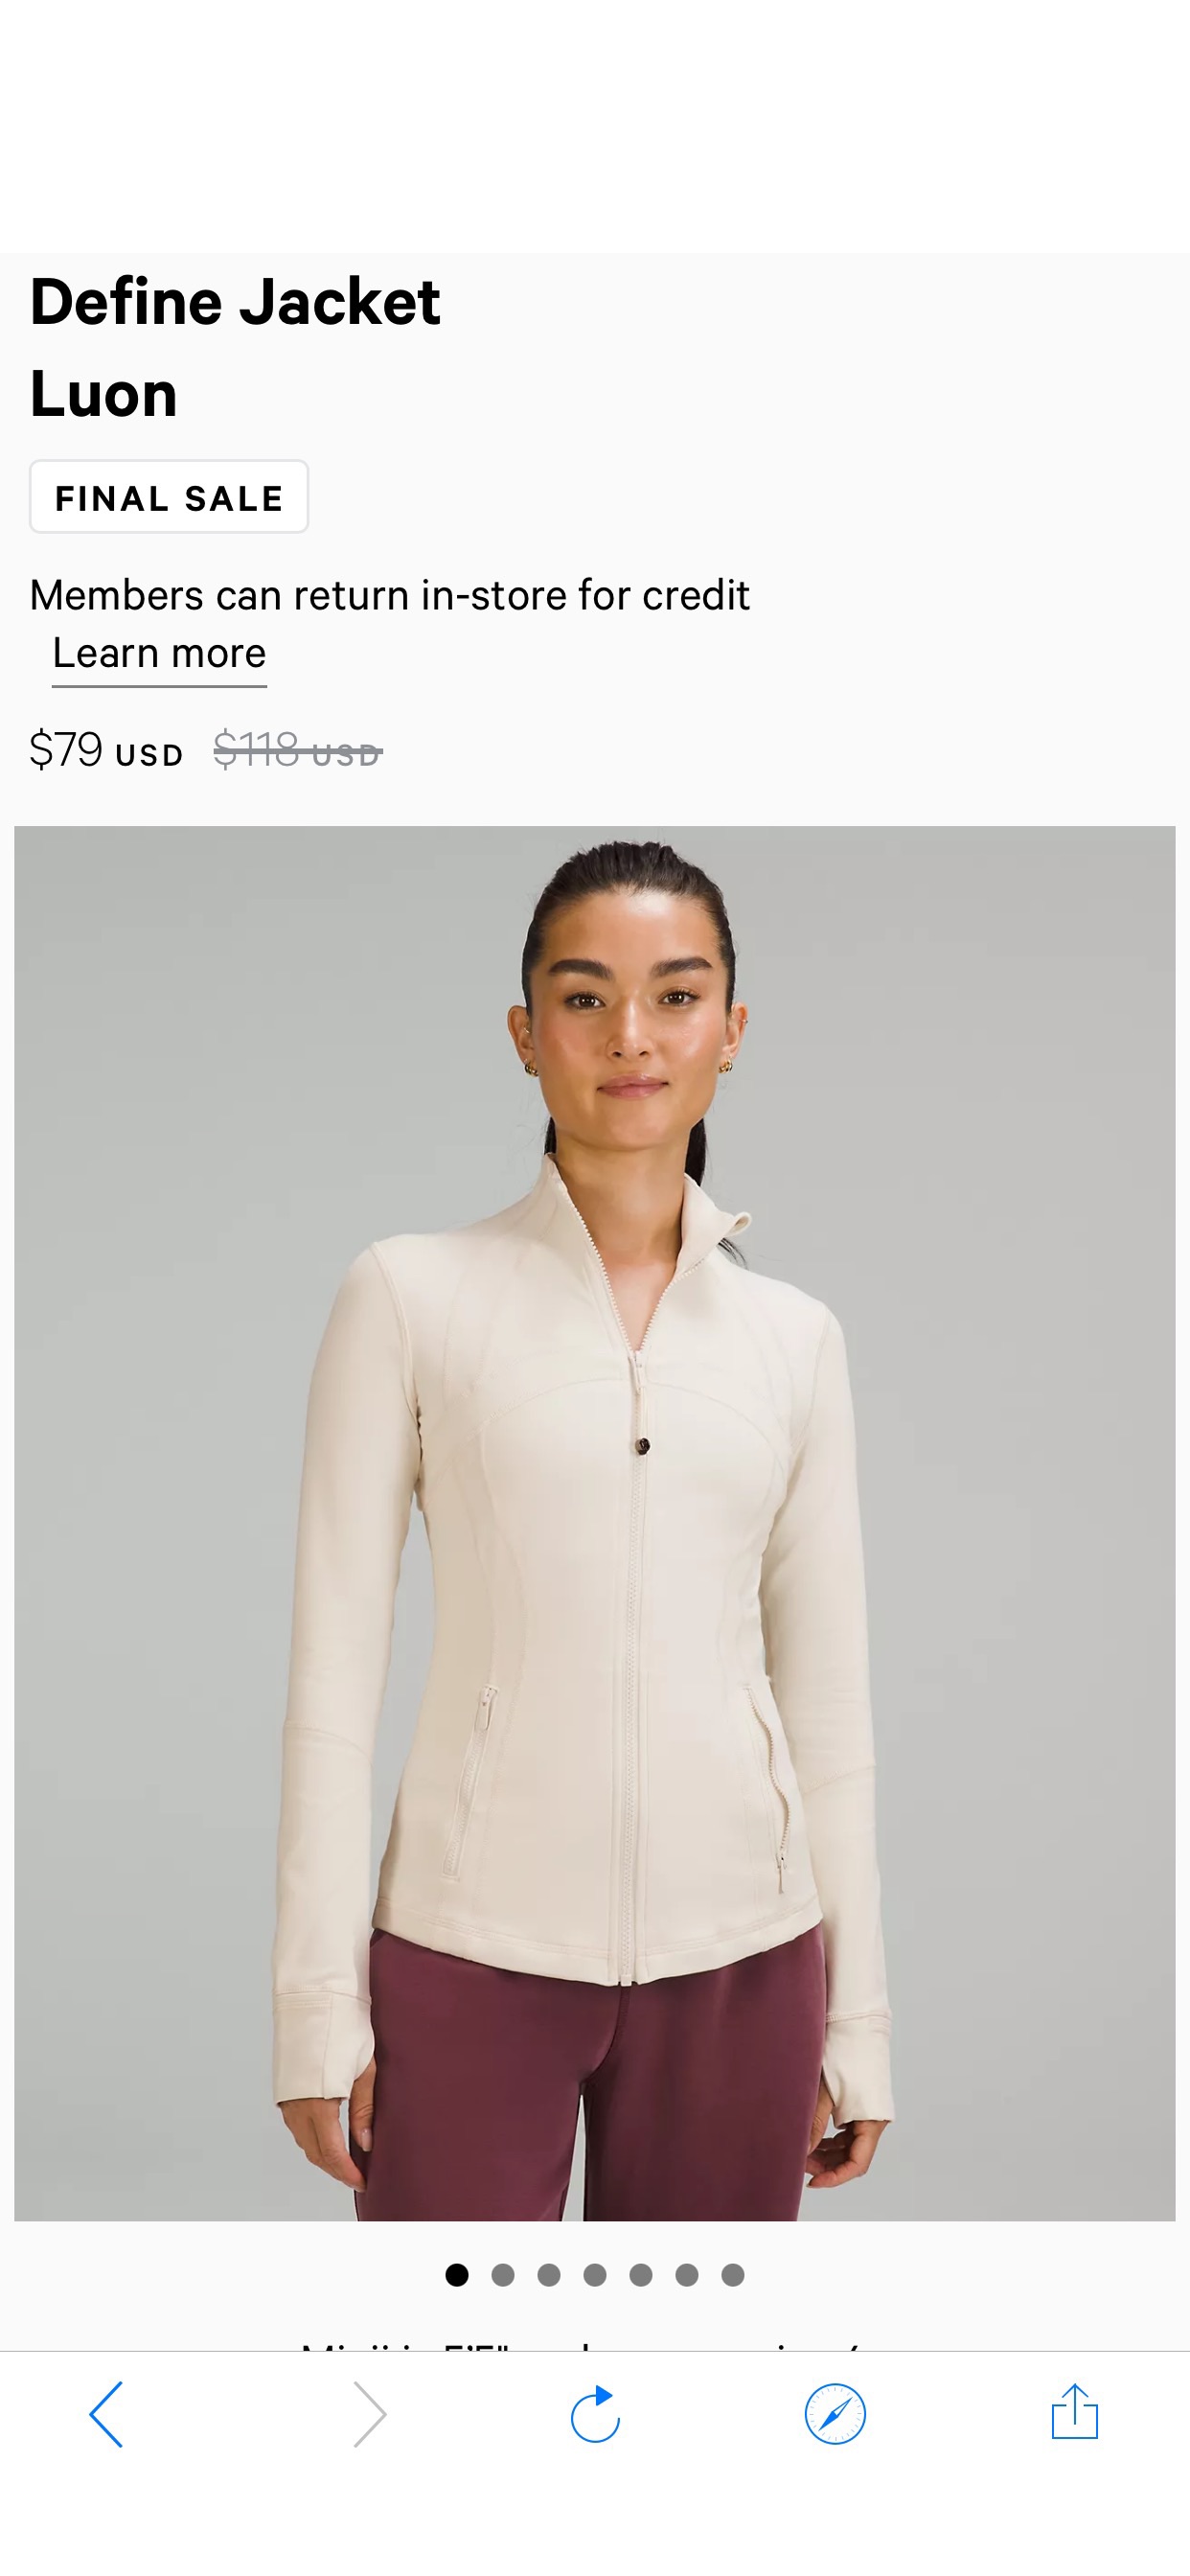 Define Jacket *Luon | Women's Hoodies & Sweatshirts | lululemon Define Jacket *Luon
原價118，現在才79，大熱色white opal還有但碼數不多